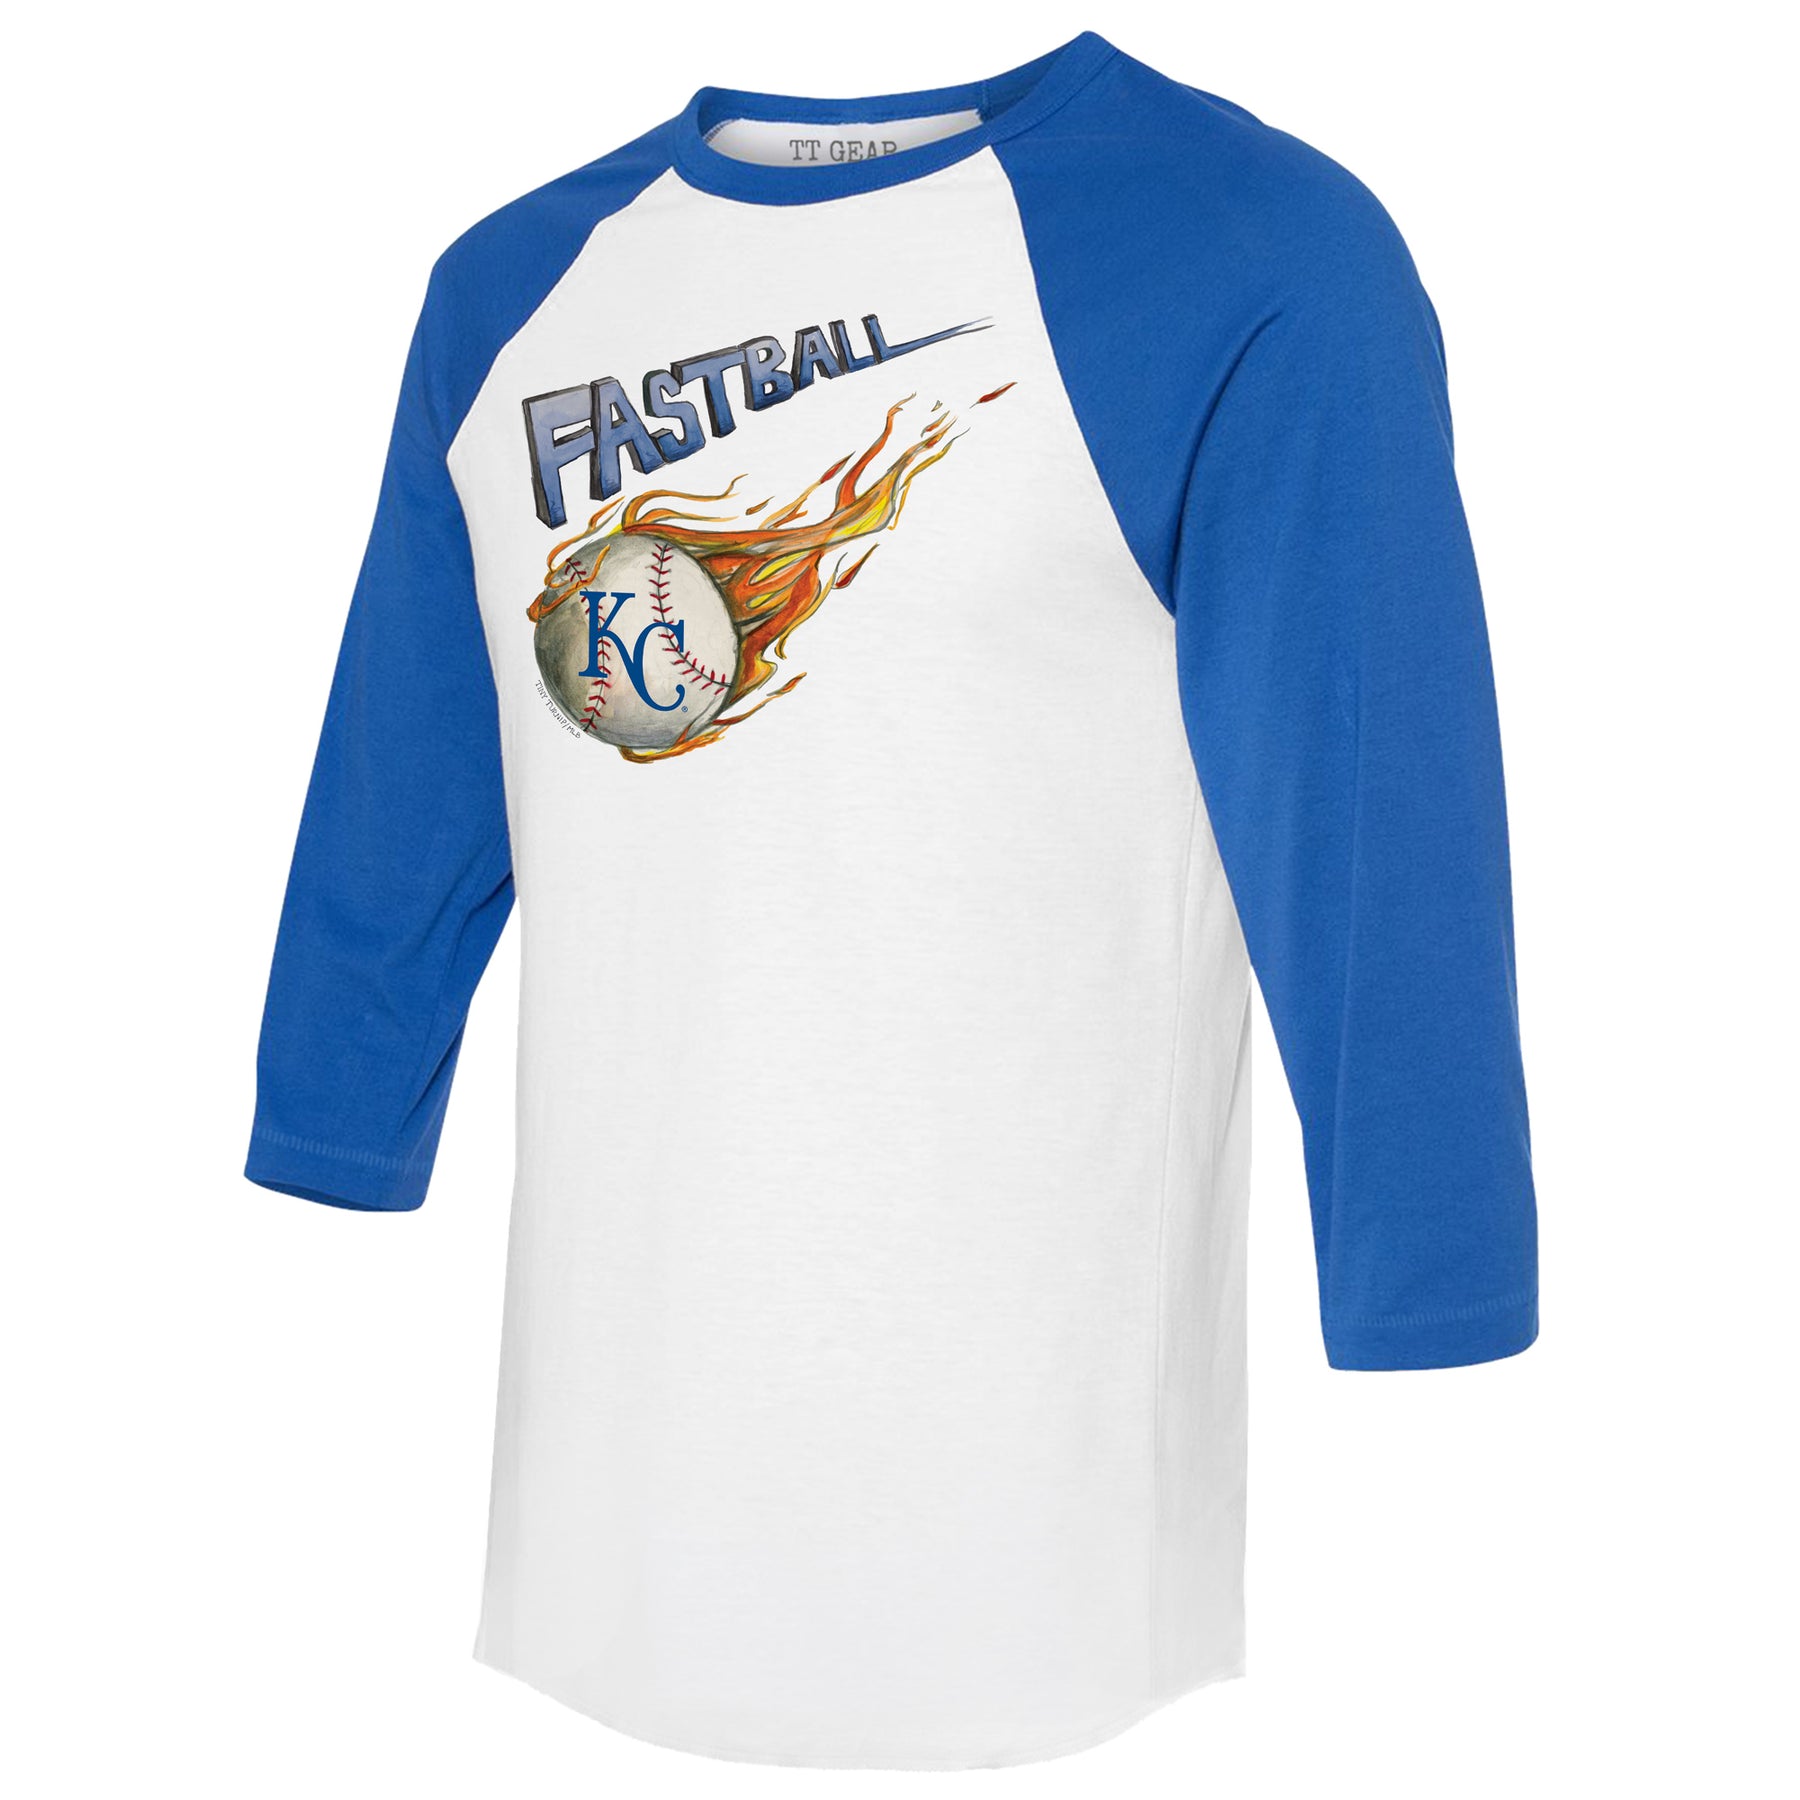 Kansas City Royals Stitched Baseball 3/4 Royal Blue Sleeve Raglan